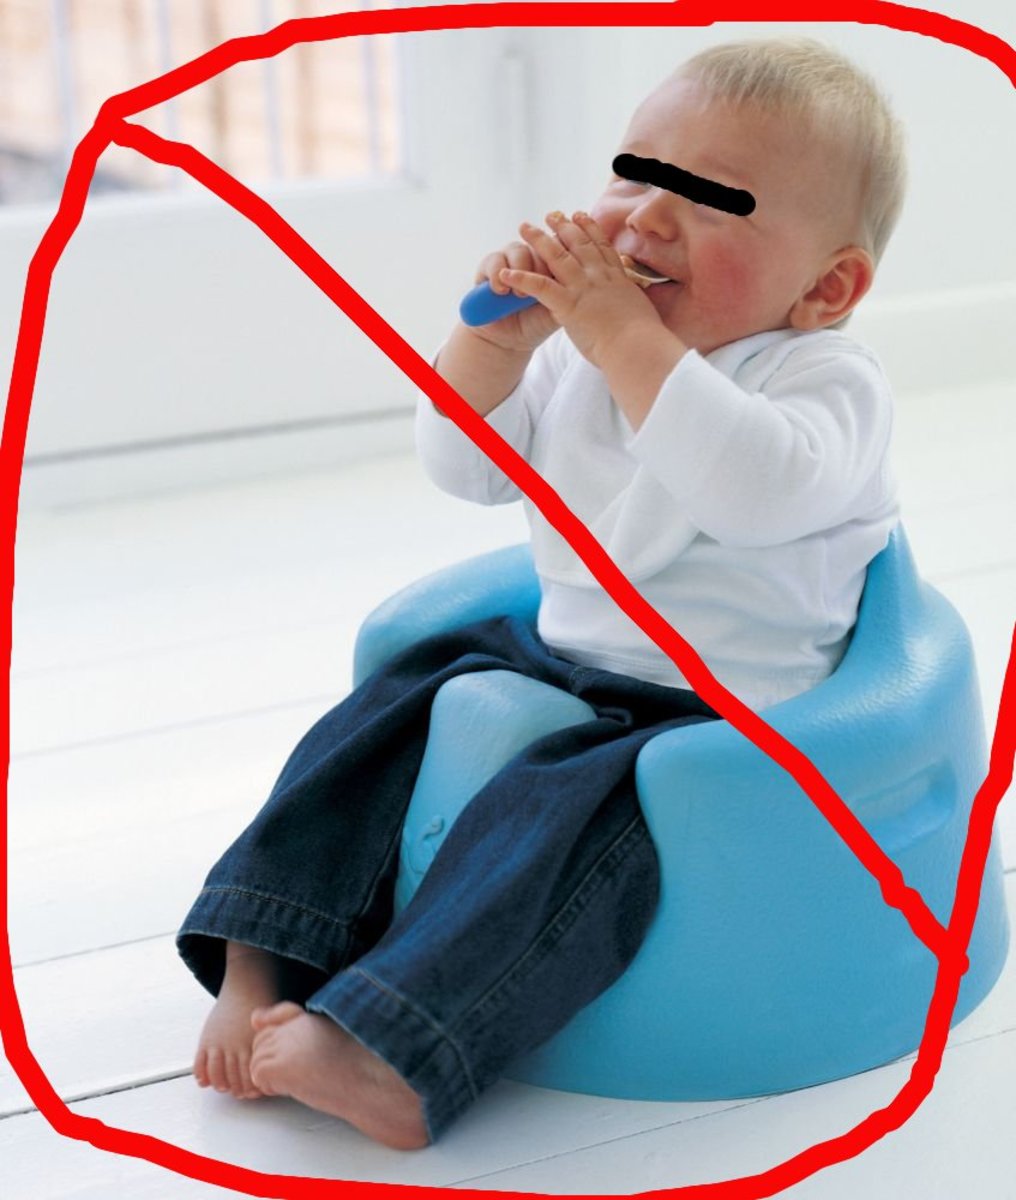 bumbo chairs bad for babies